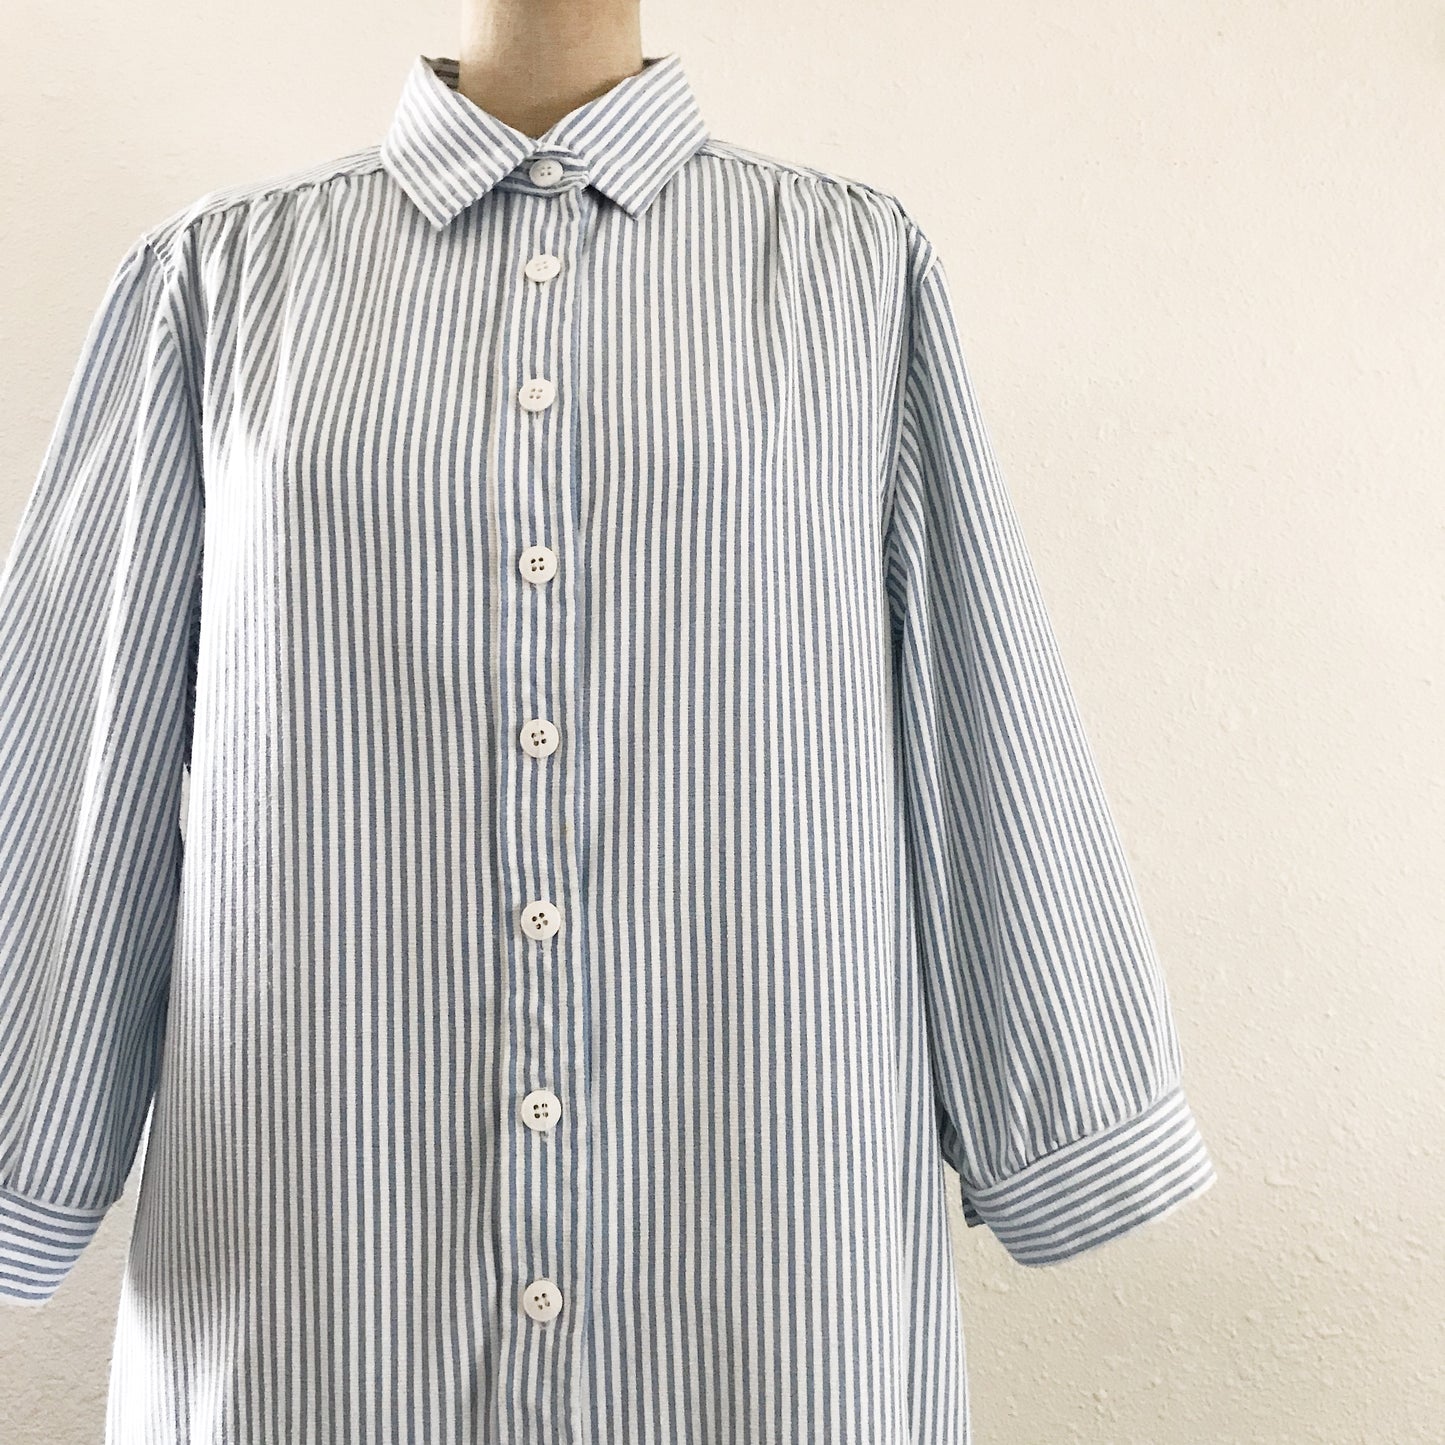 Vintage Blue White Striped Cotton Drop Waist Midi Dress